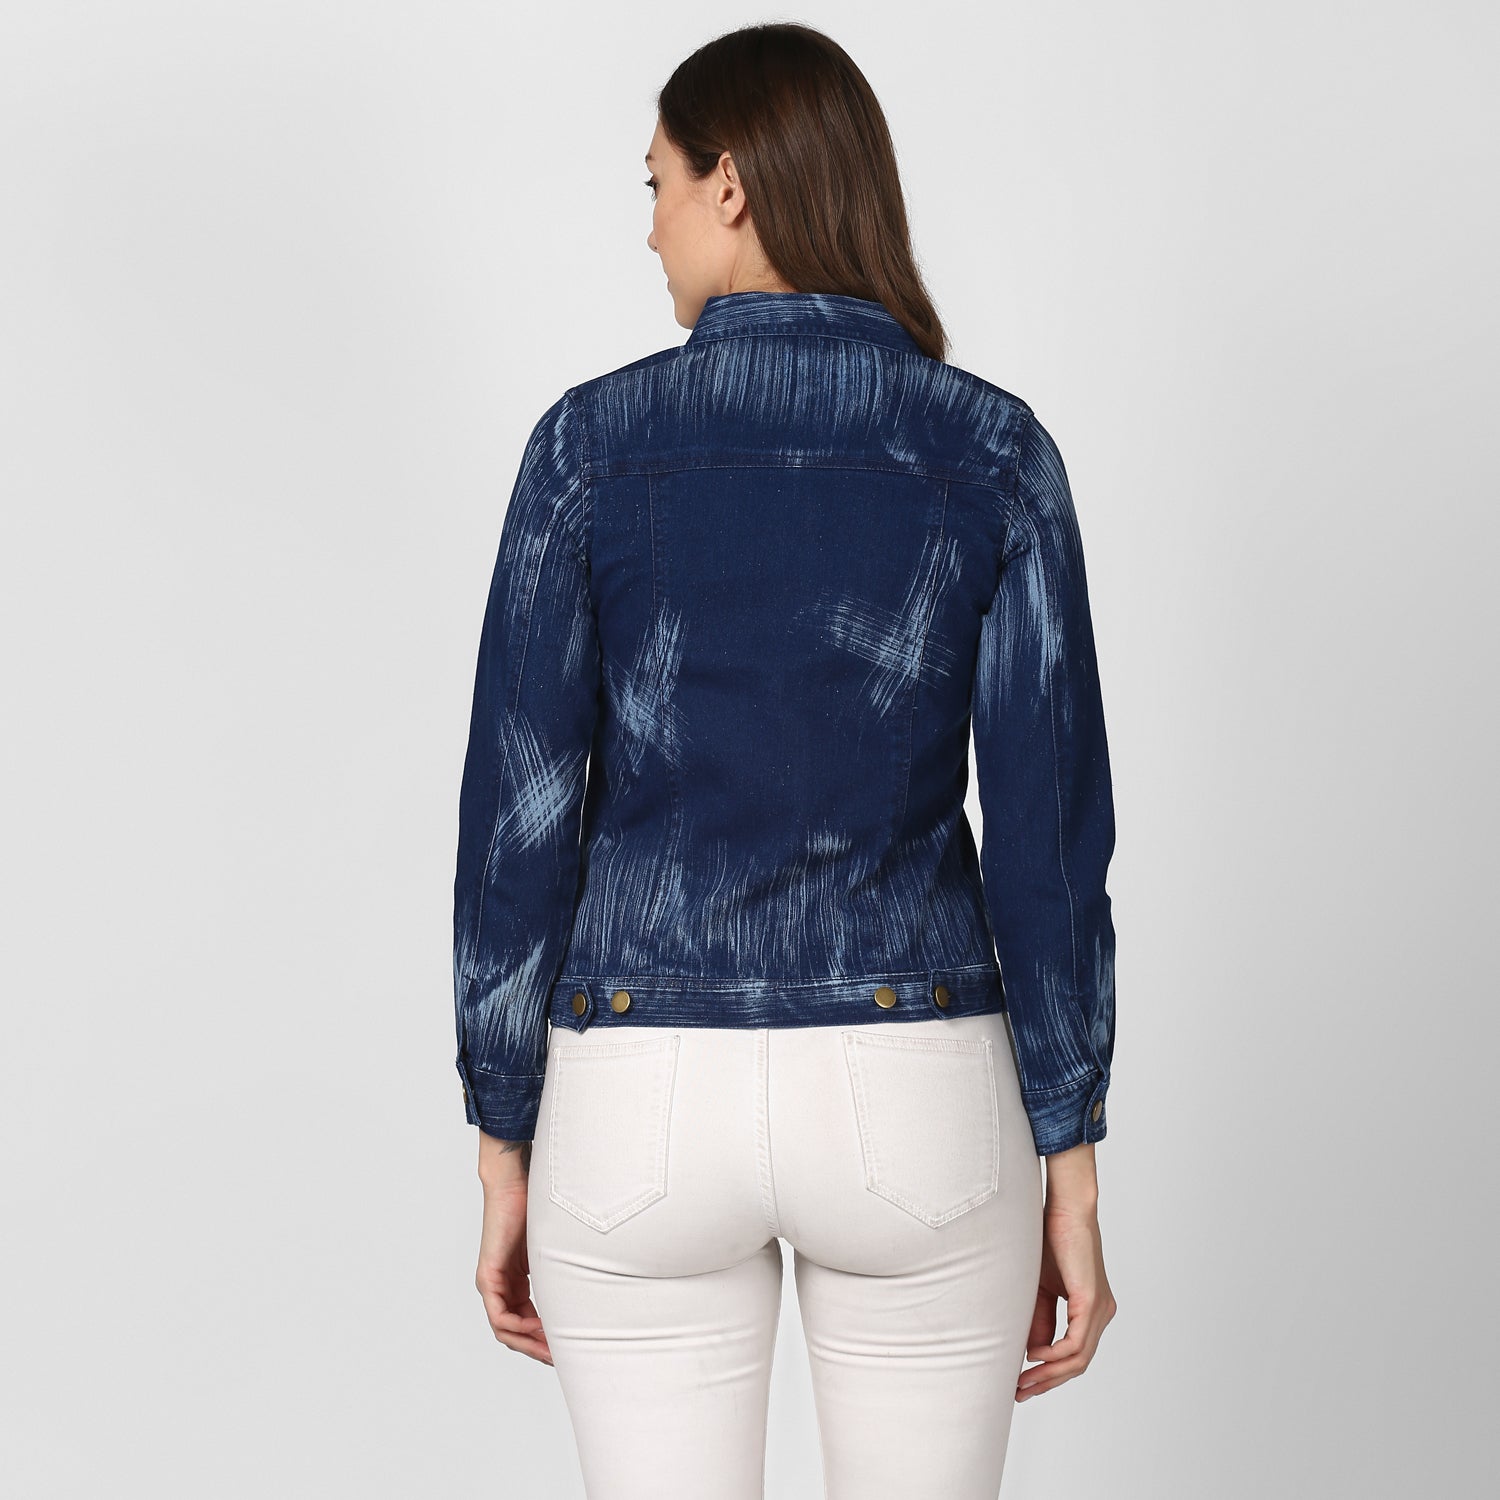 Women's Blue Denim Jacket with Washed effect - StyleStone